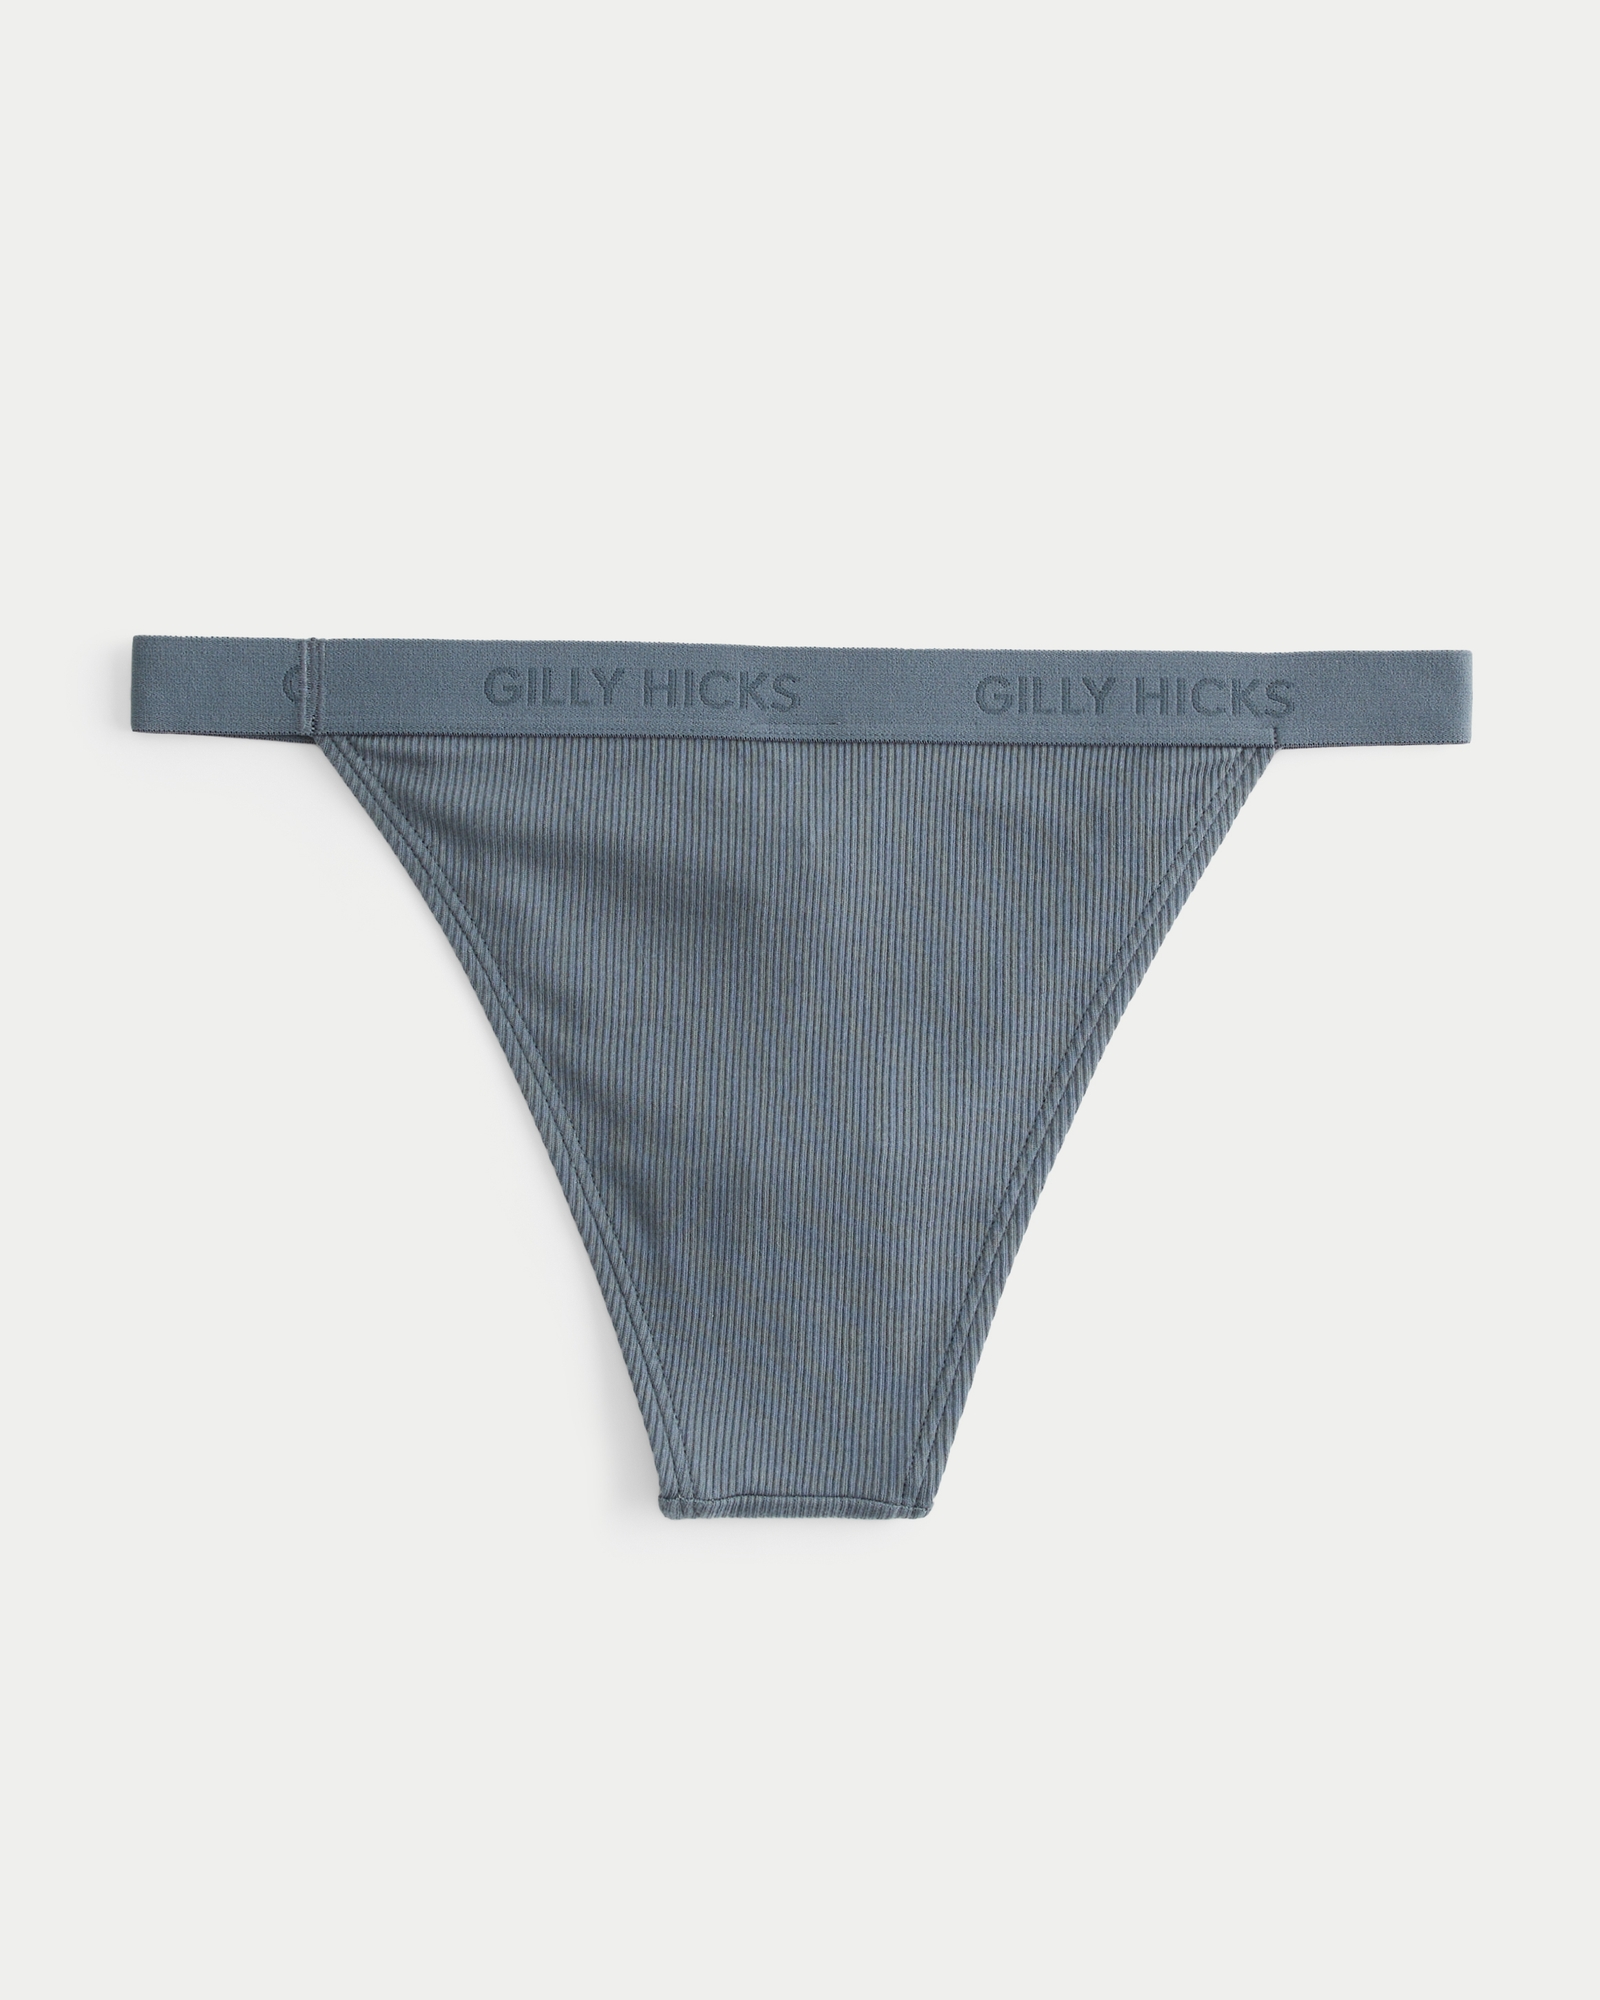 Hollister Gilly Hicks No-Show Thong Underwear